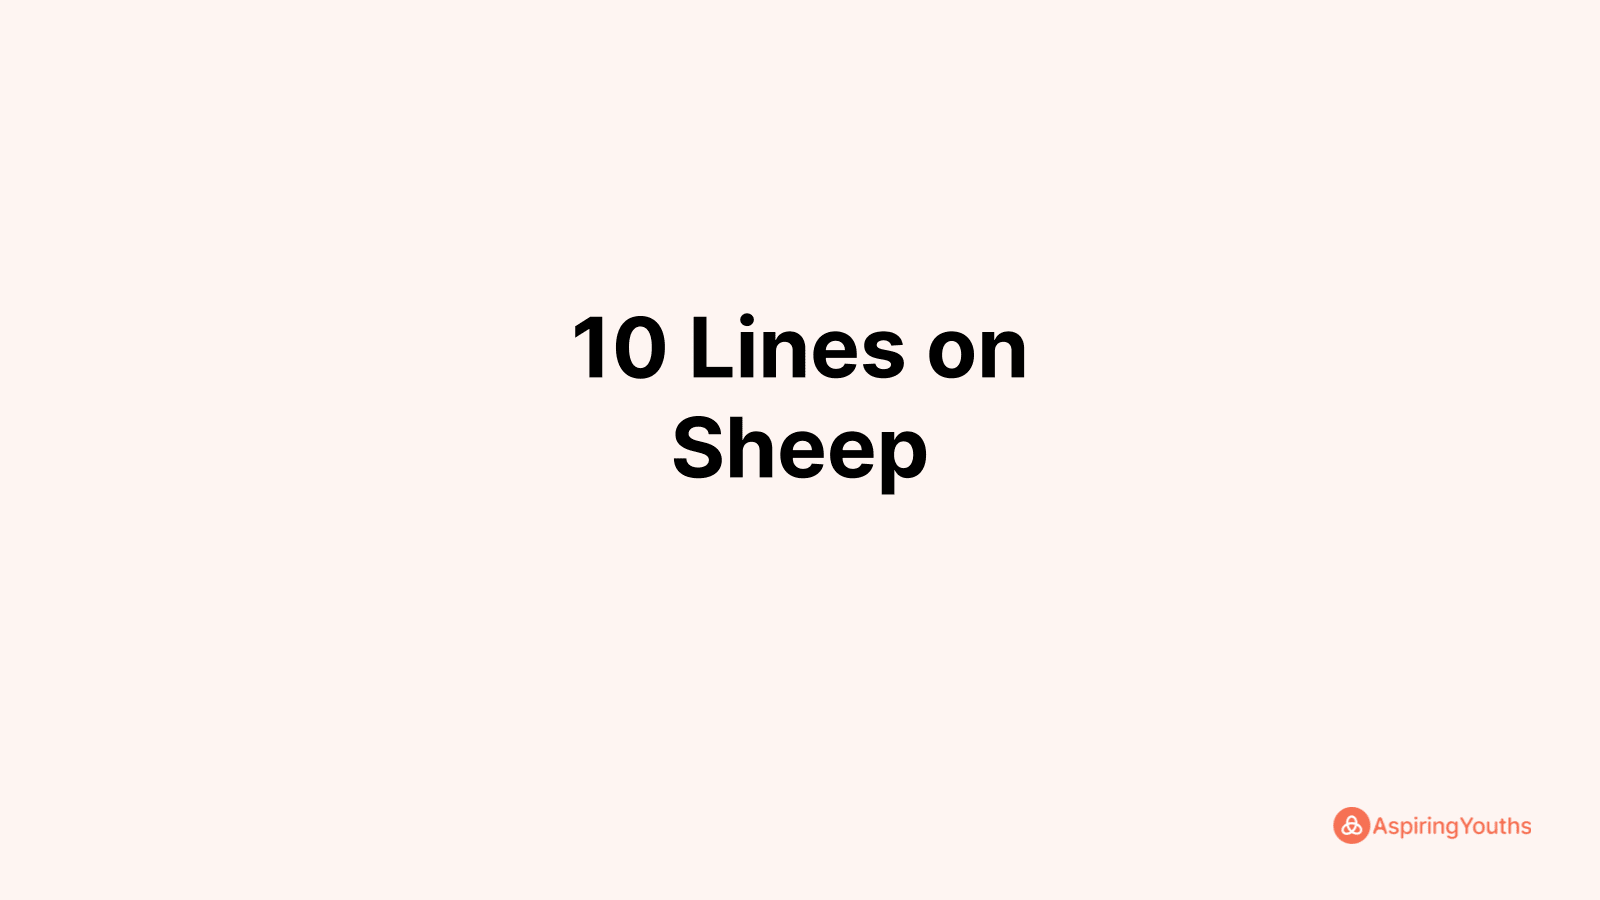 Write 10 Lines on Sheep